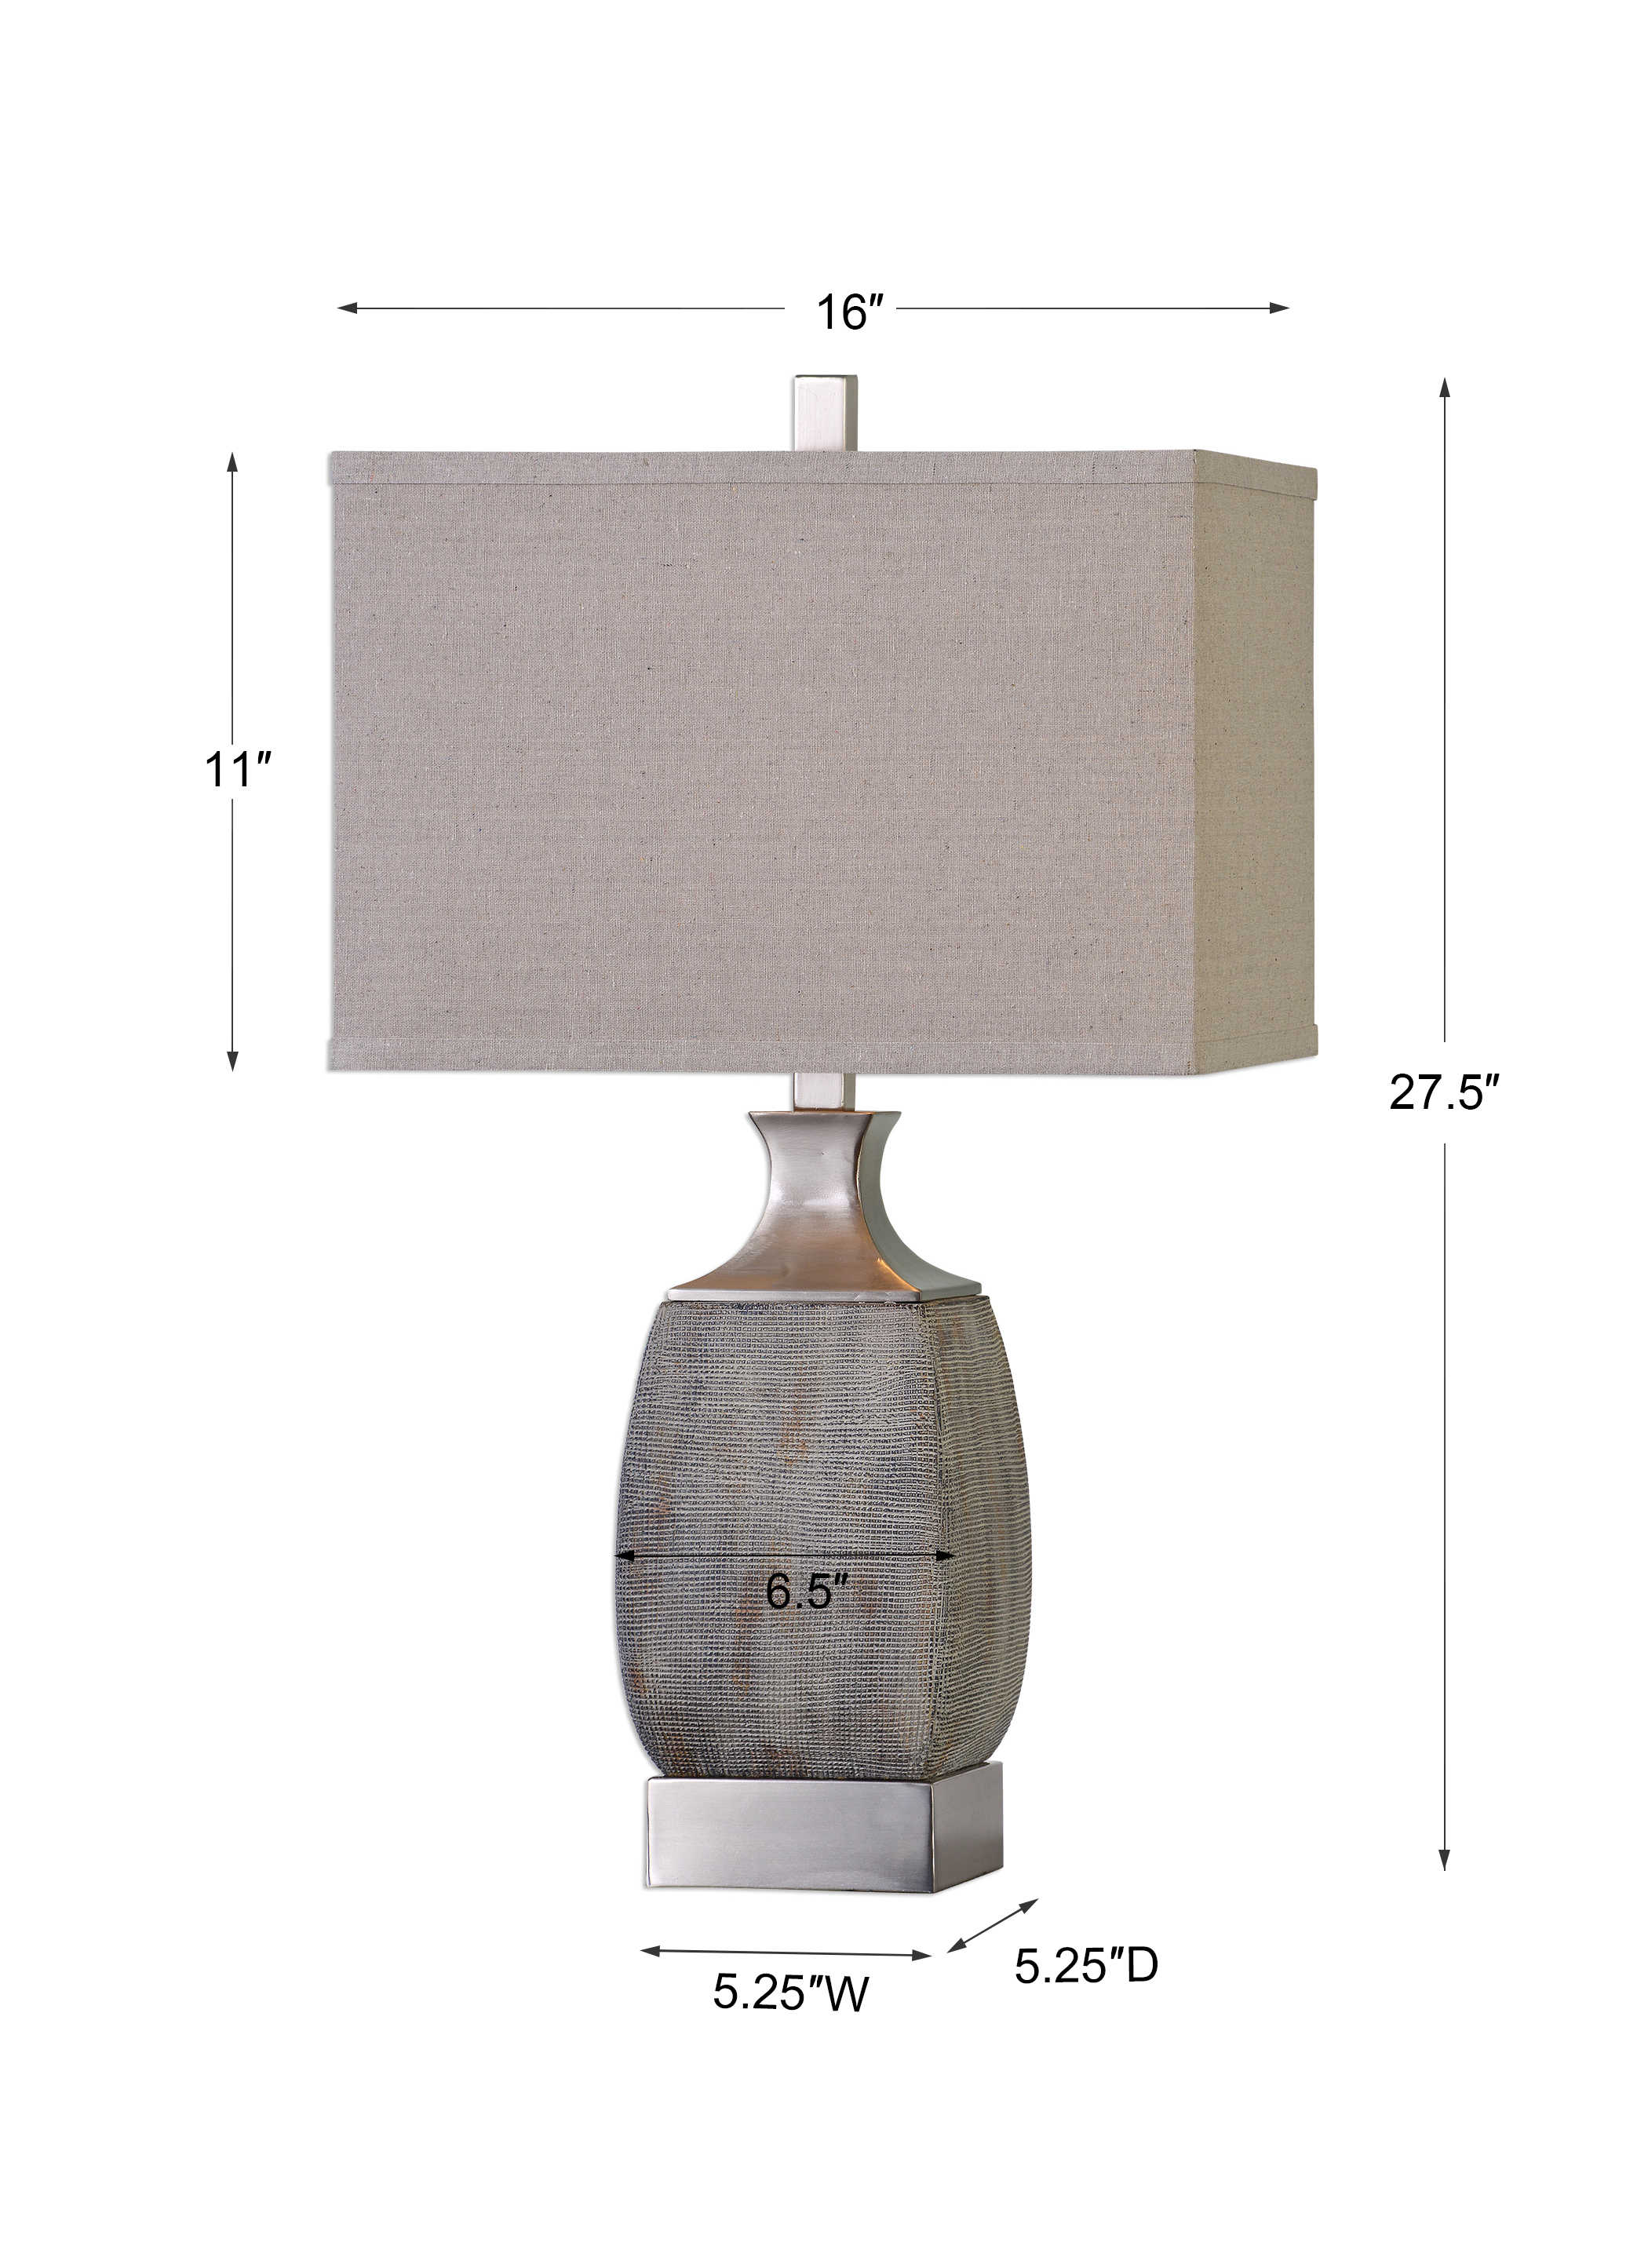 Lamp, Caffaro - Danshire Market and Design 